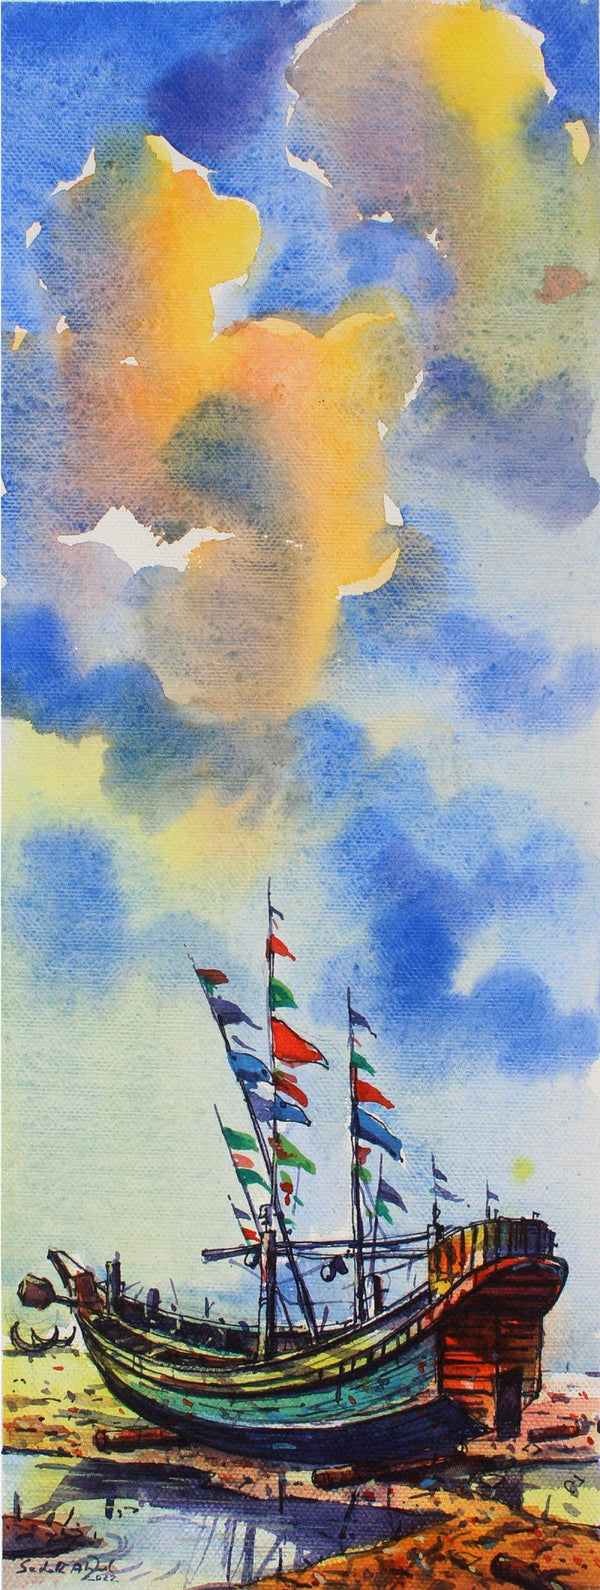 The Boats 2 Painting by Sadek Ahmed | ArtZolo.com